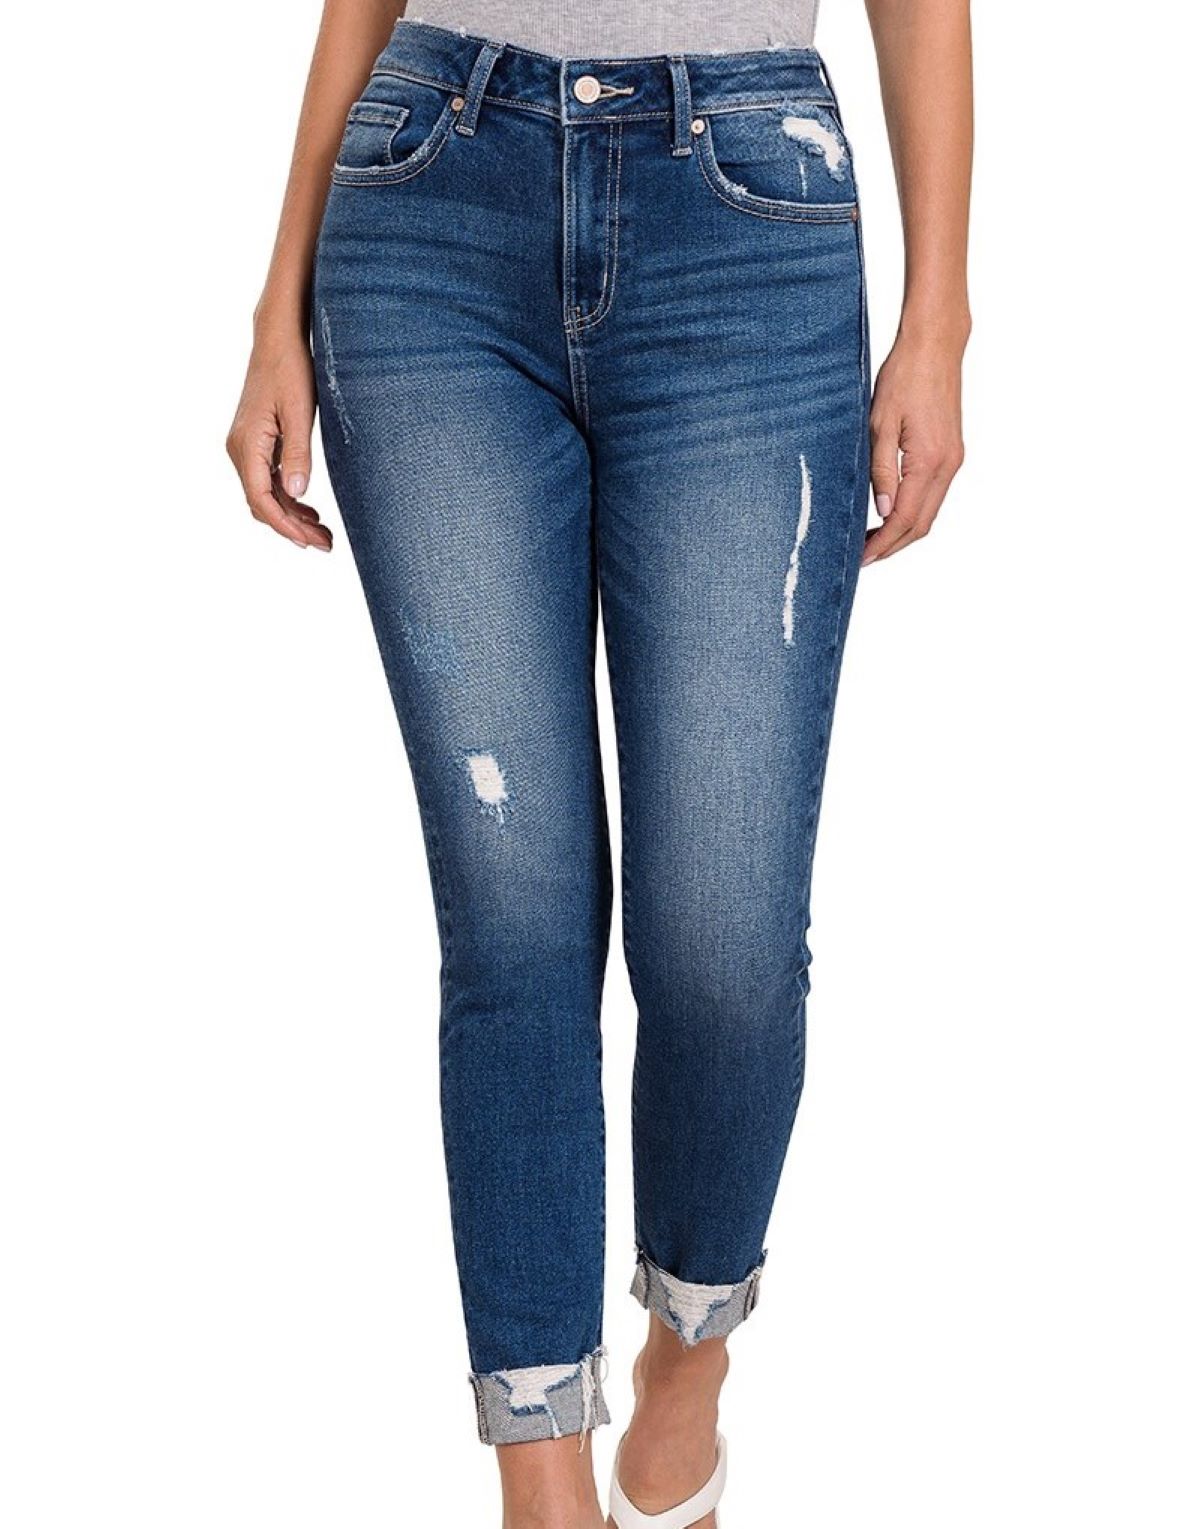 Lana Distressed Skinny Jeans - SALE